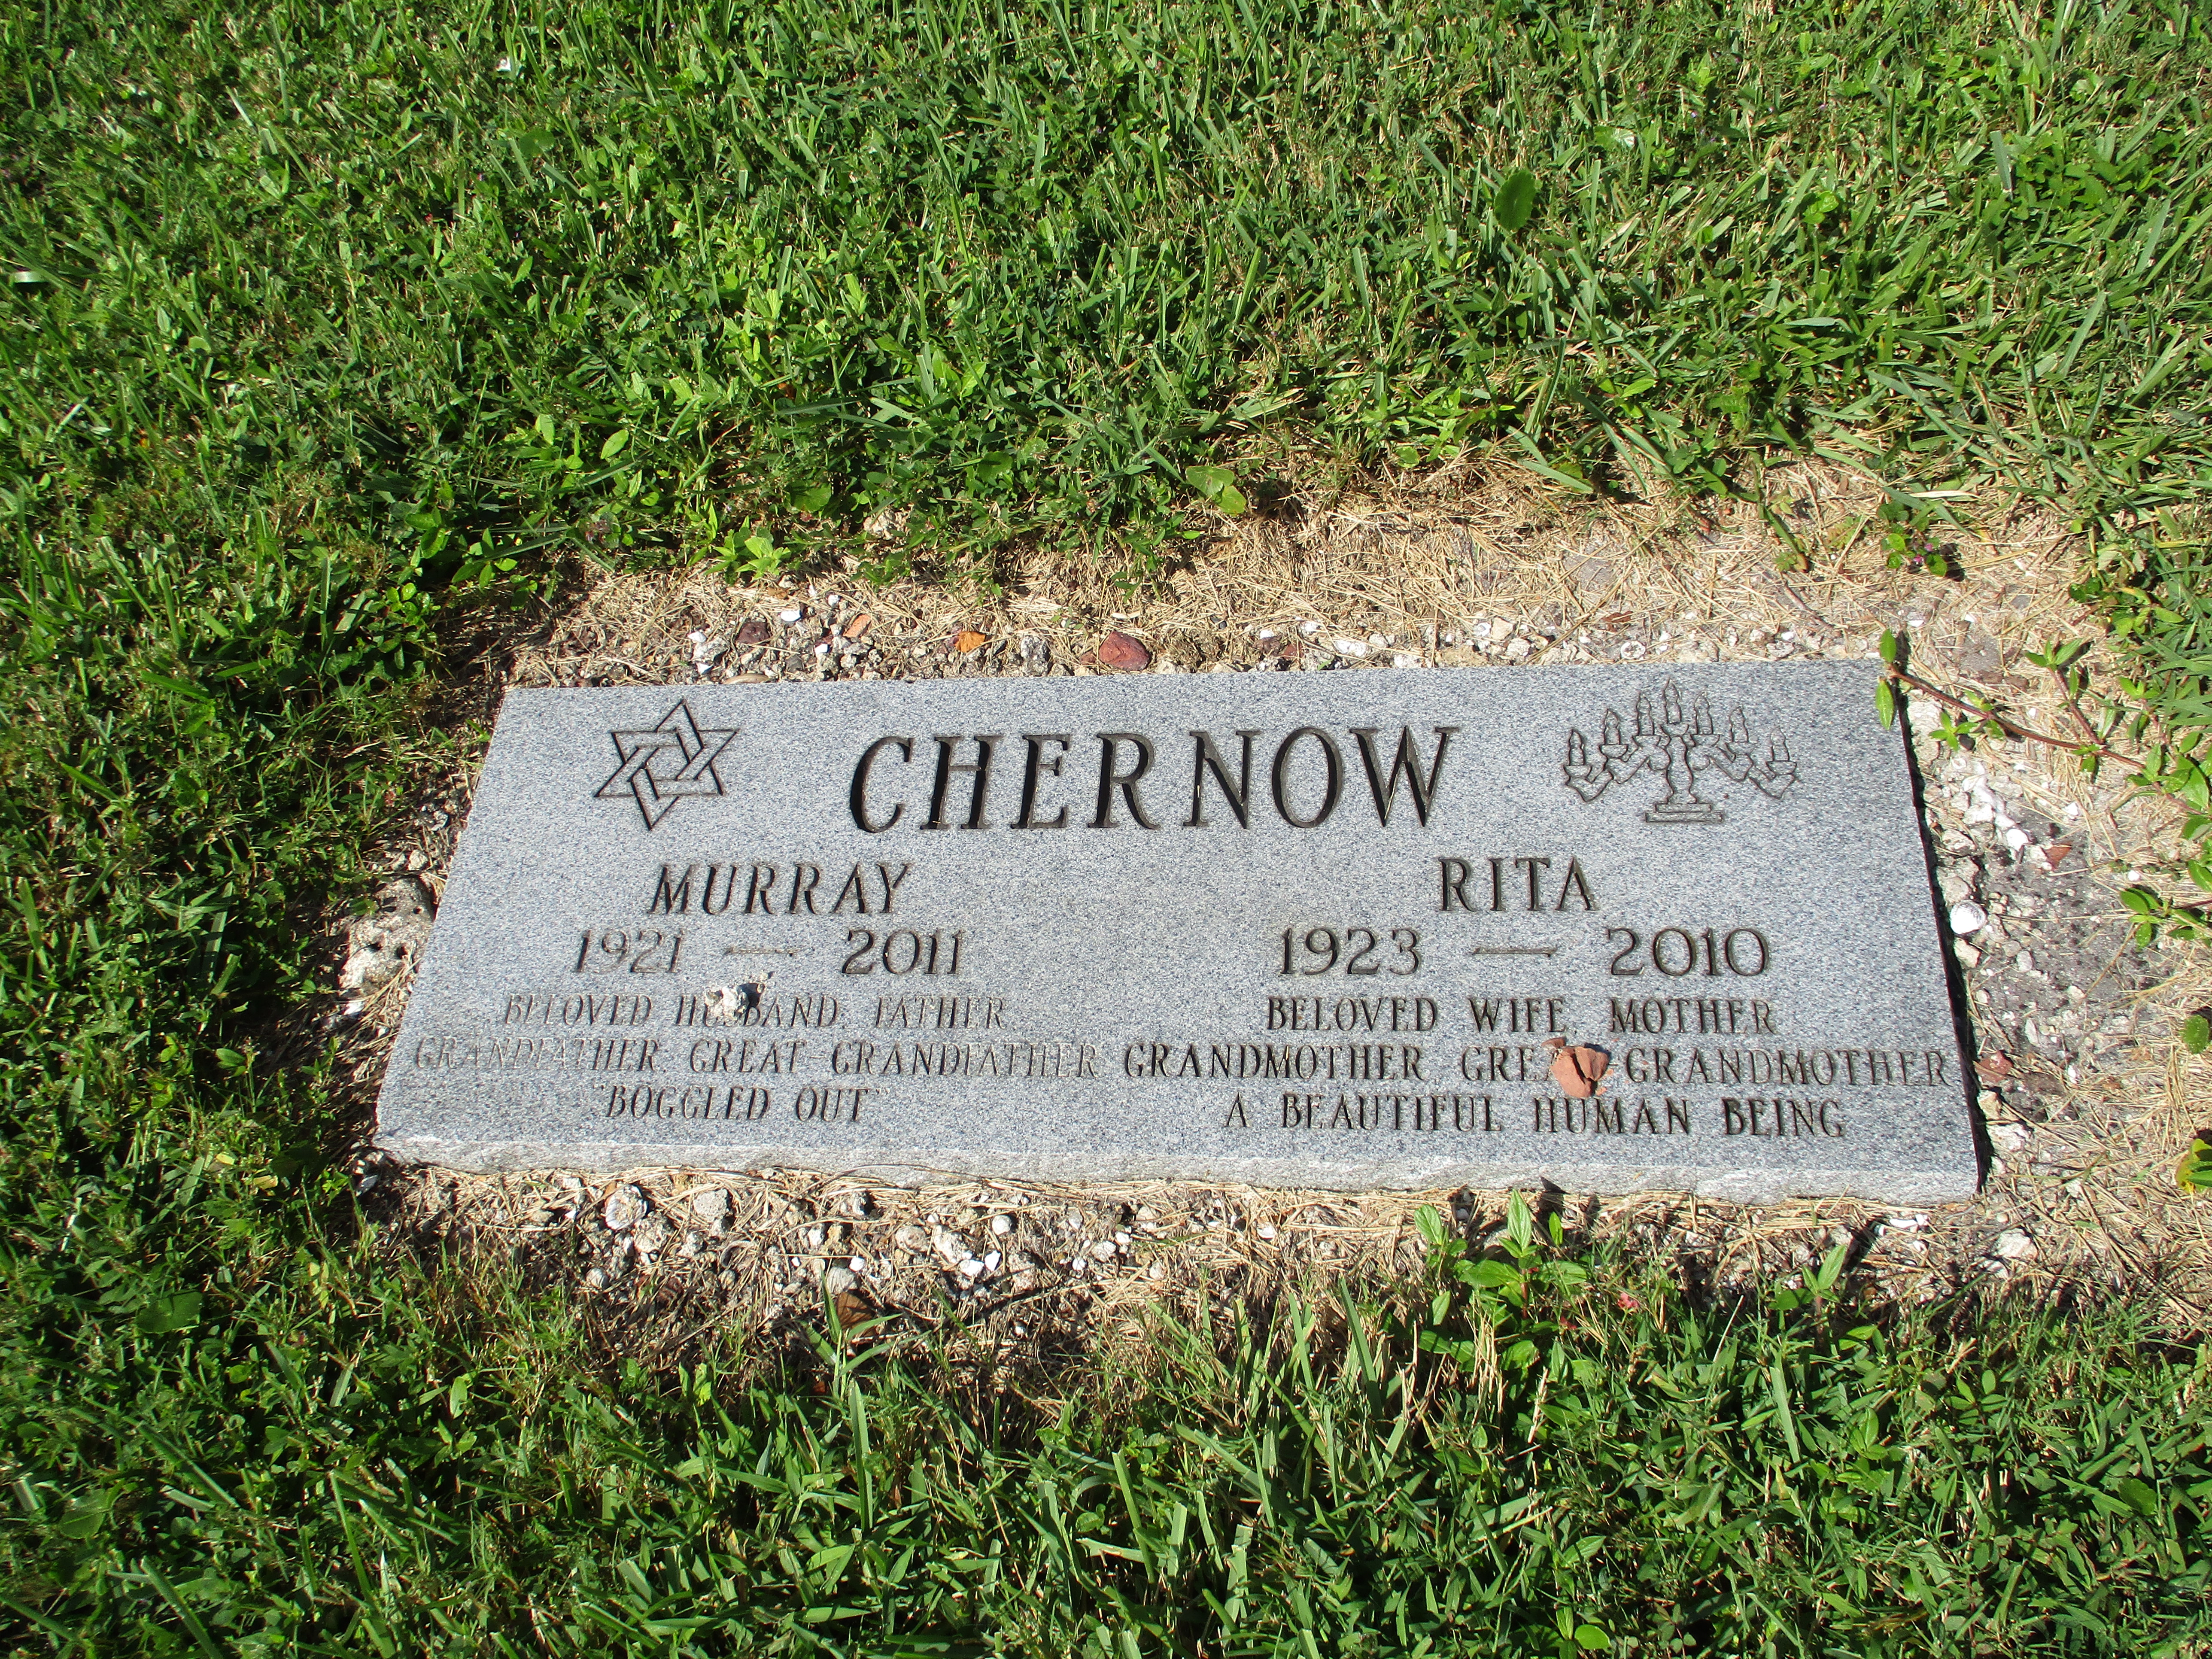 Rita Chernow